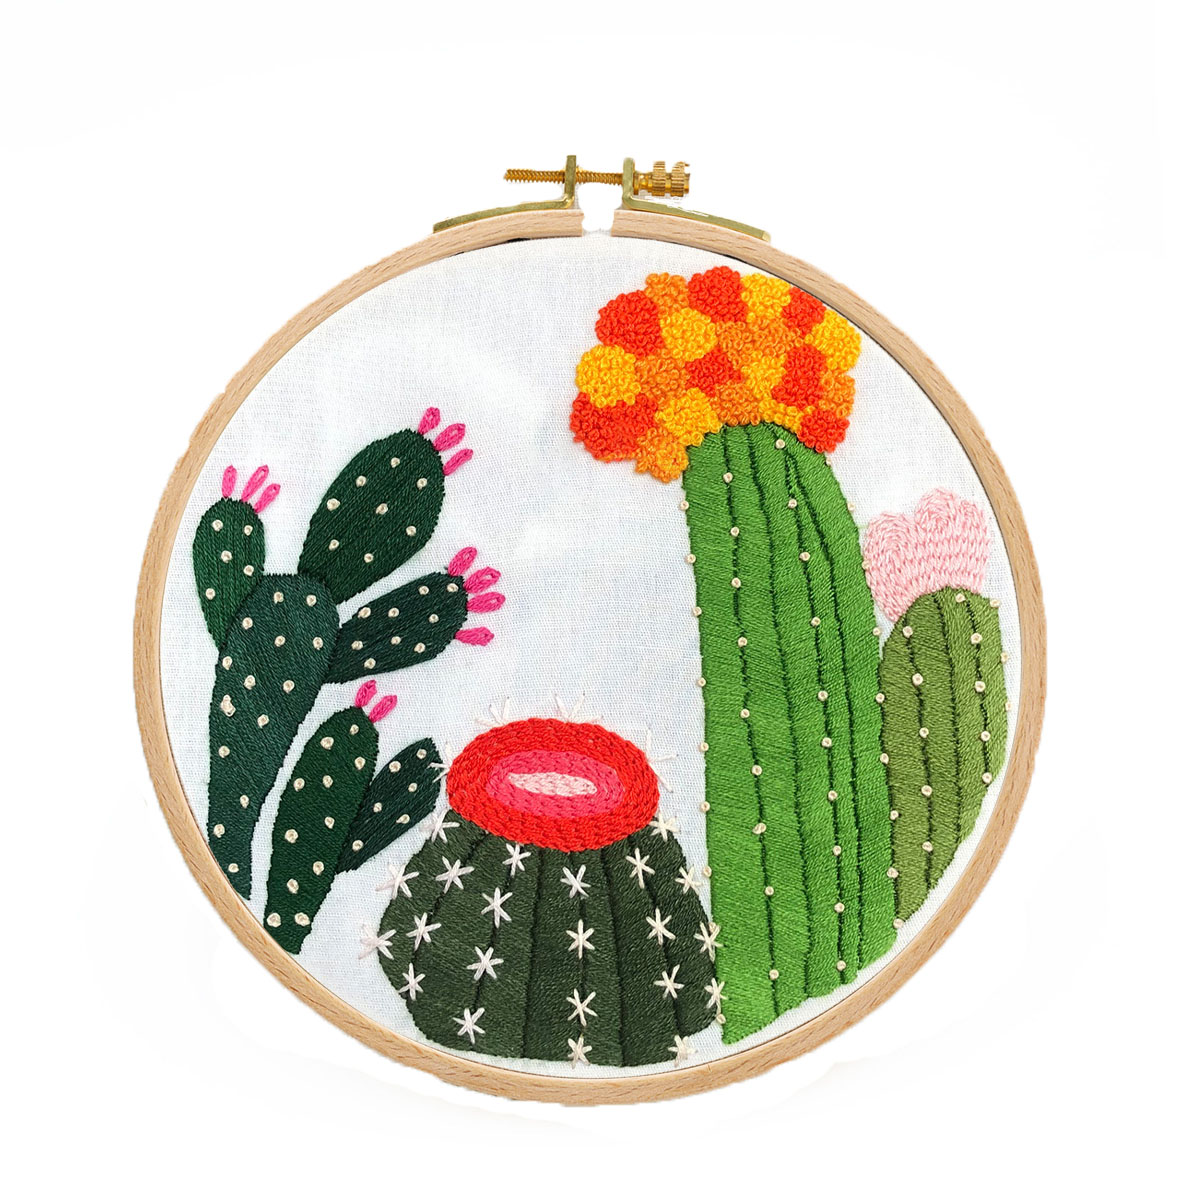 Embroidery Kits Handmade Craft Cross stitch kits - Cute Cactus Pattern